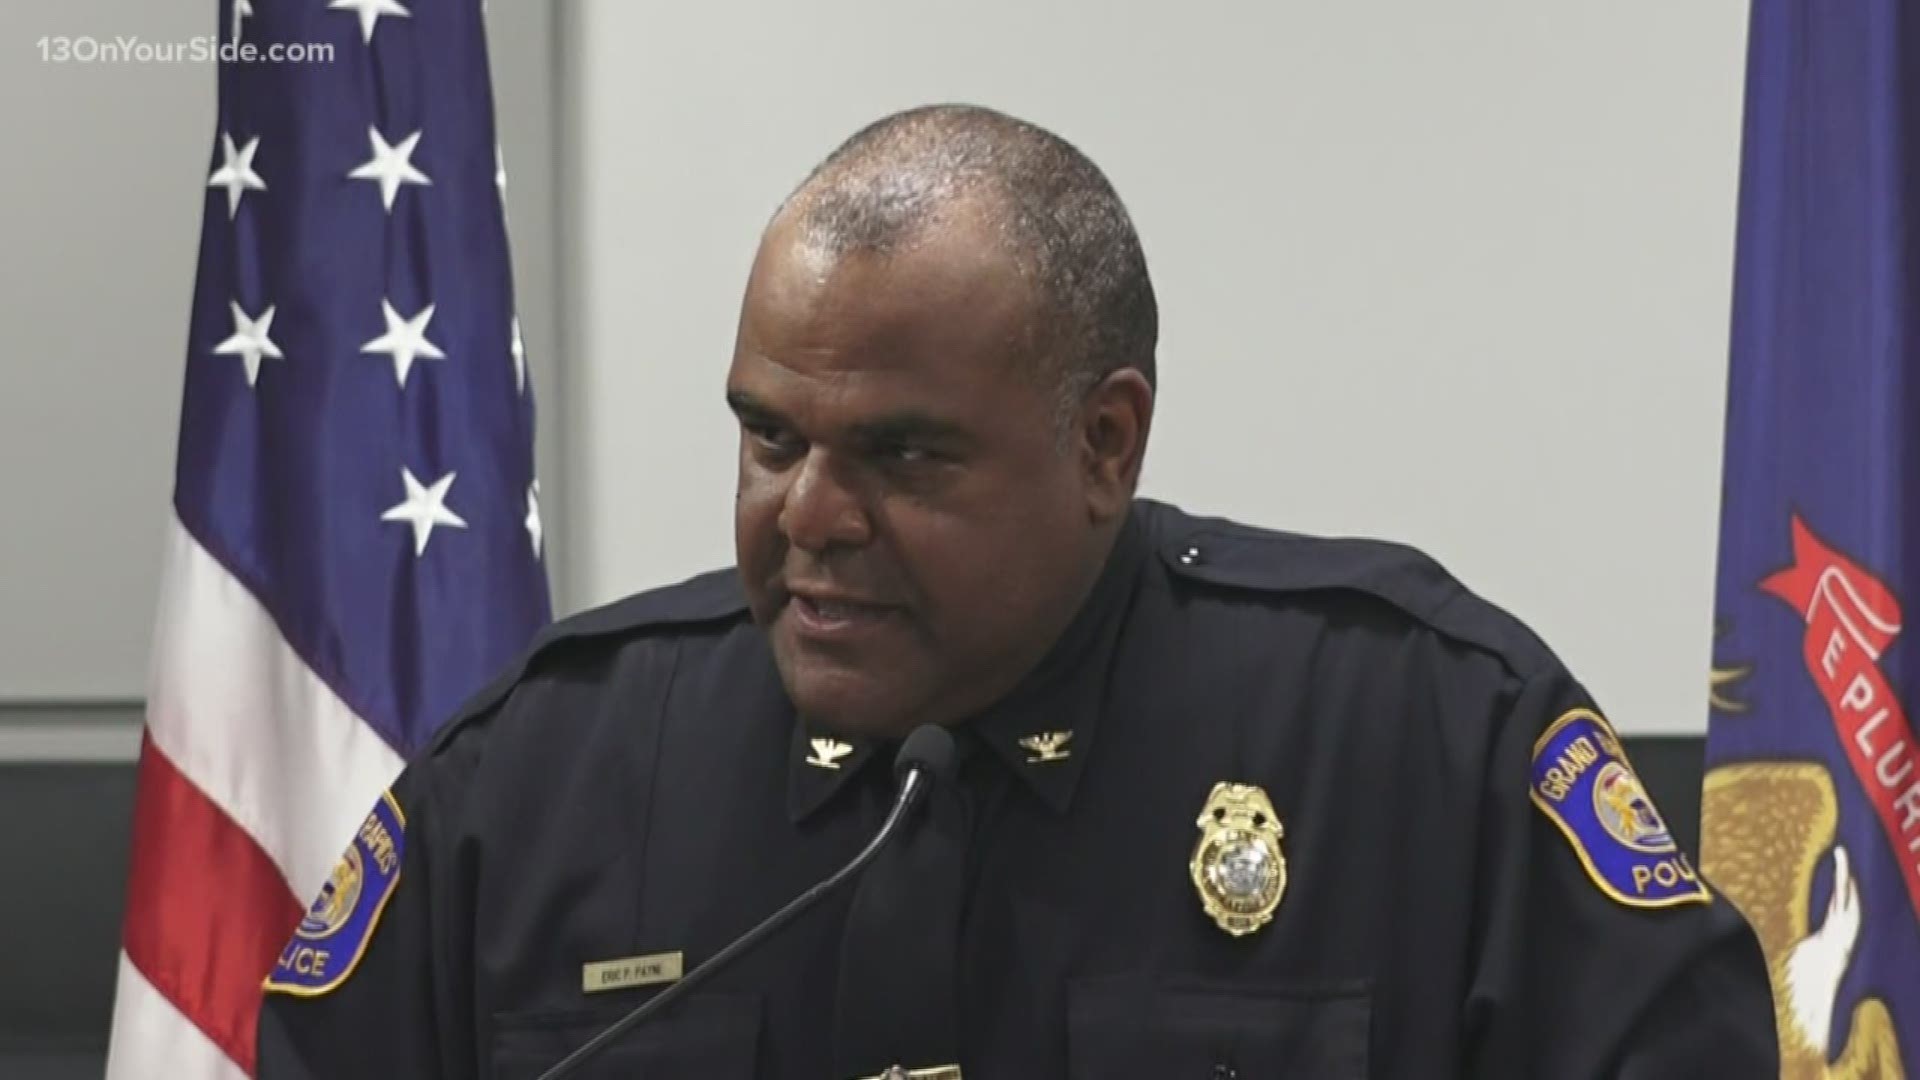 New Grand Rapids police chief sworn in